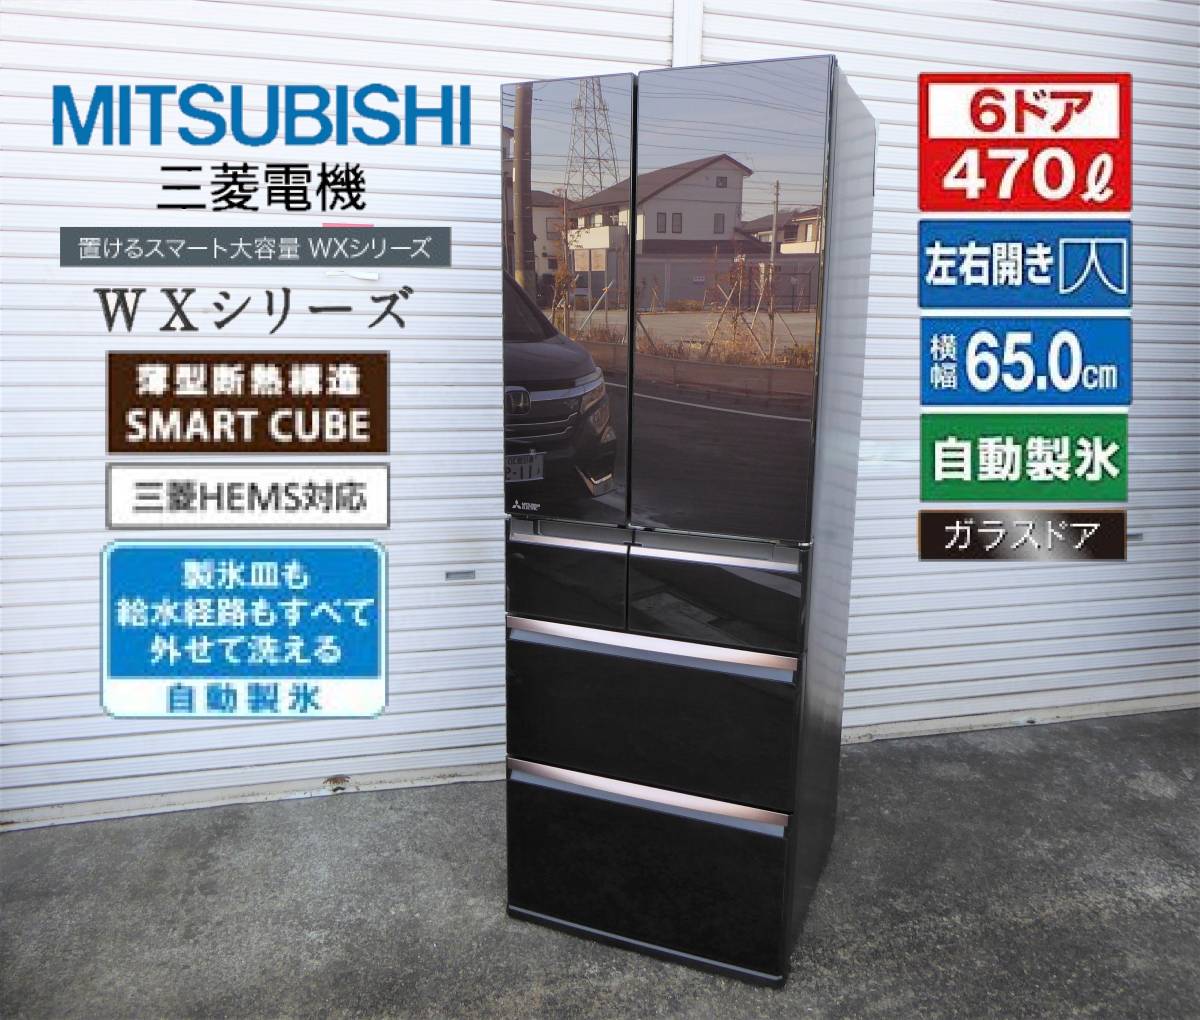 2015年式 475L 冷凍冷蔵庫 MITSUBISHI MR-JX48LZ-N - 冷蔵庫・冷凍庫